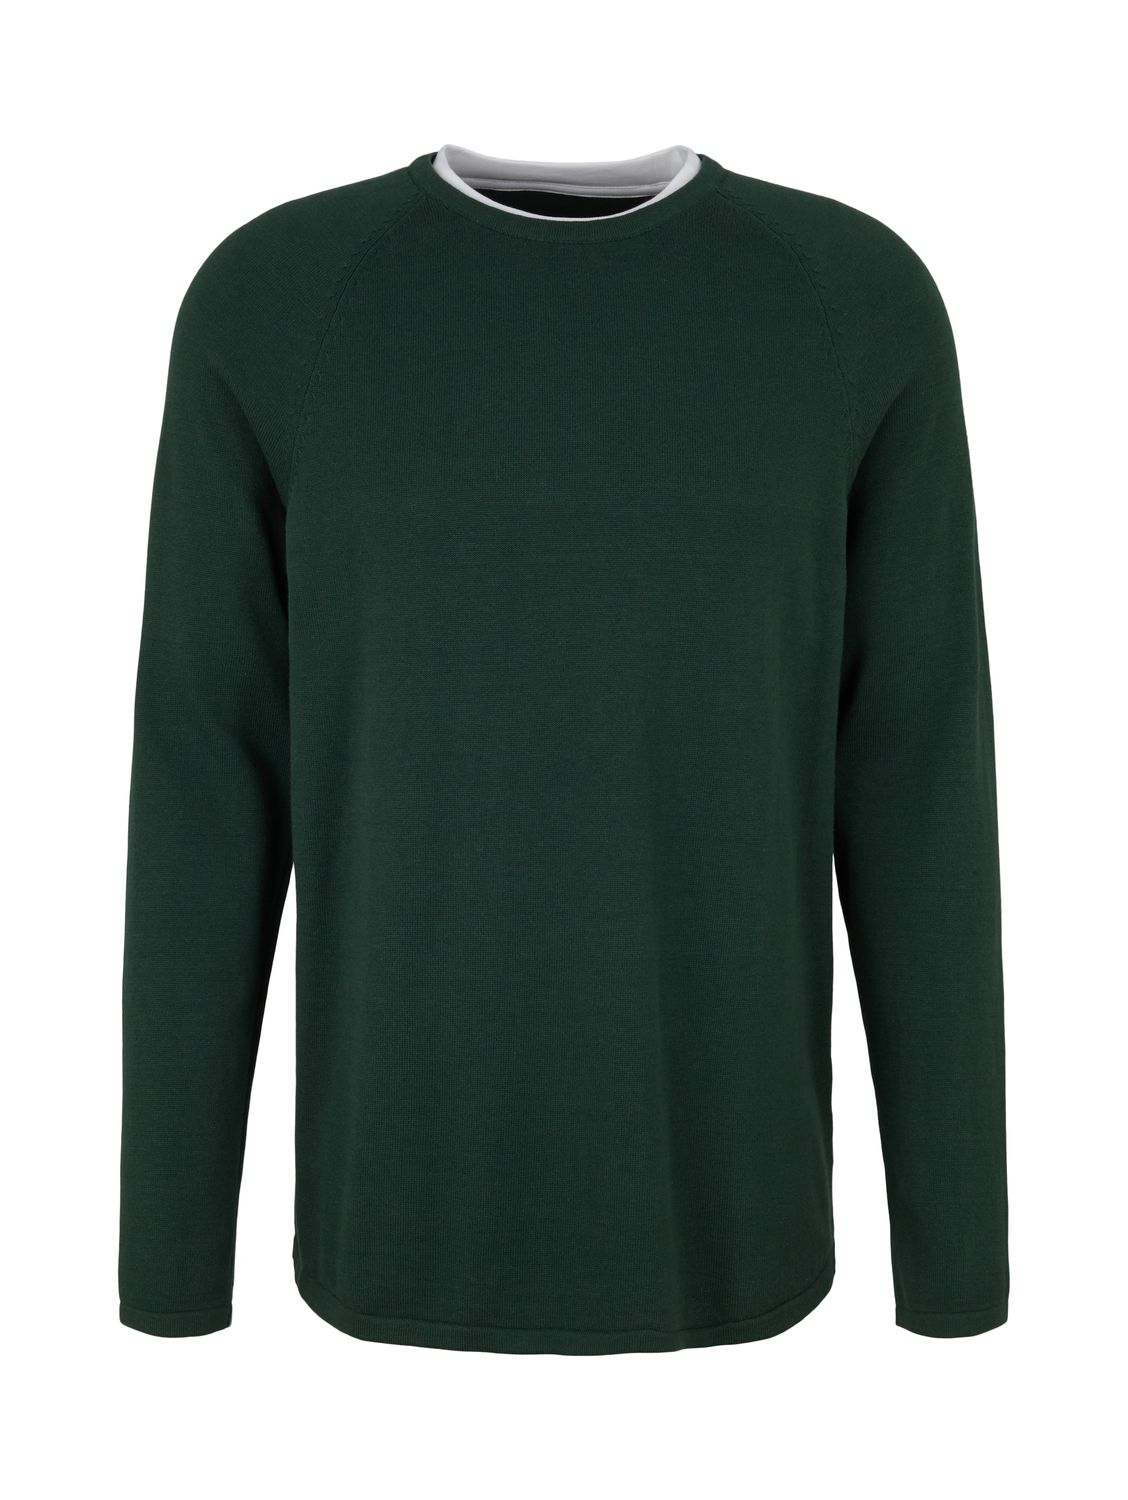 Пуловер TOM TAILOR Denim BASIC, зеленый футболка tom tailor размер m зеленый белый